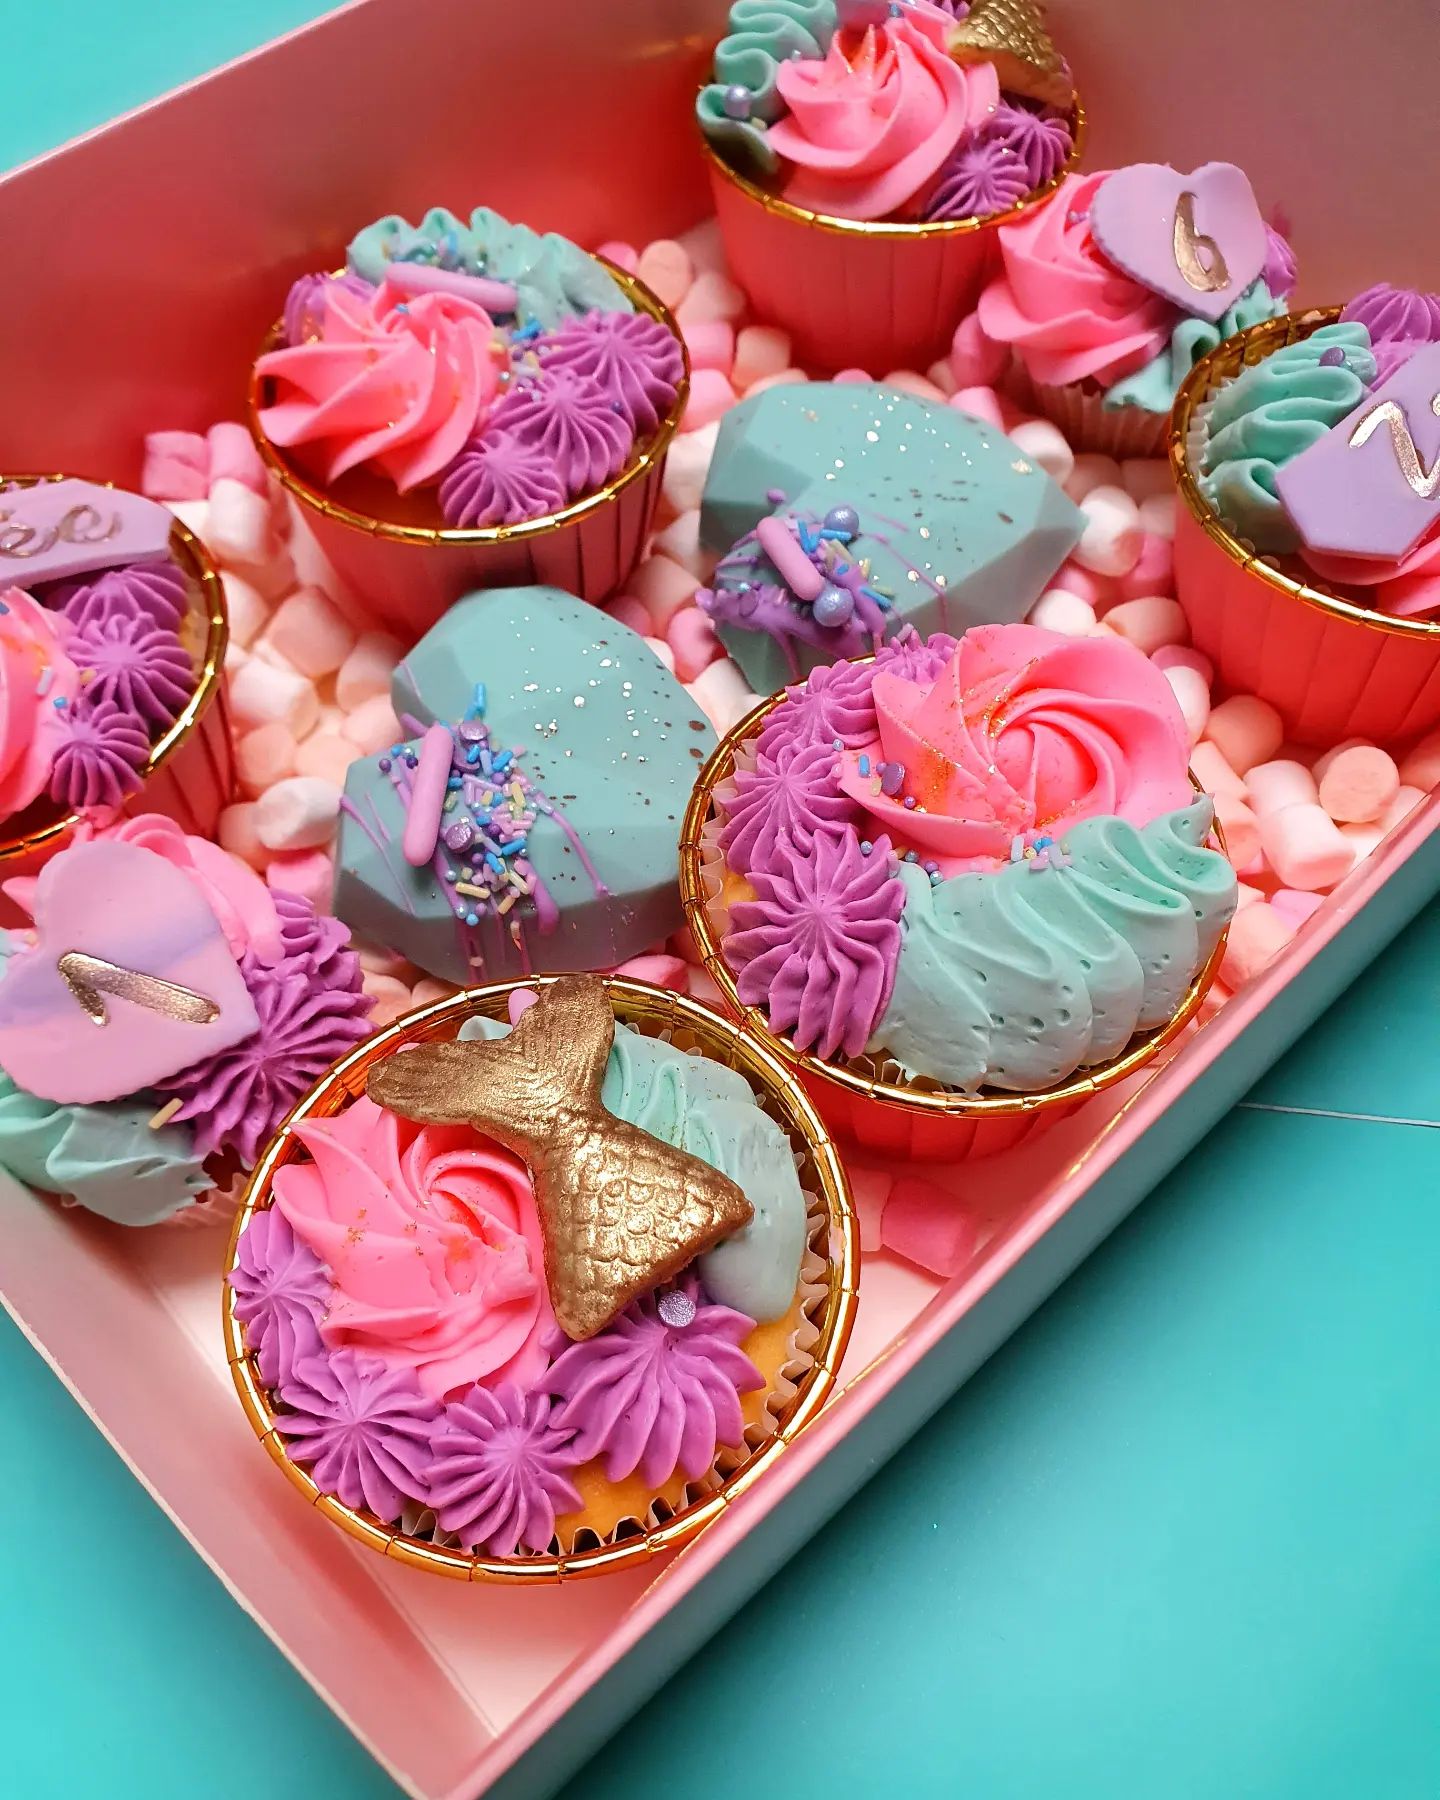 MERMAID SWEETBOX Ik hou toch echt van deze kleurencombinatie  #treatboxes #cakesicles #pastelcake #juffrouwtaart  #cupcake #cakes #pink #instacake #cakesdaily #caketrends #cakedecorator #cakestagram #sprinkles #taartgroningen#cakecakecake #juffrouwtaartsweets #howtocakeit  #cupcakes #cake #deleukstethuisbakker #treatbox  #pastelaesthetic #treatboxes  #dessert #cakehearts #birthdaycake #funcakesbyme